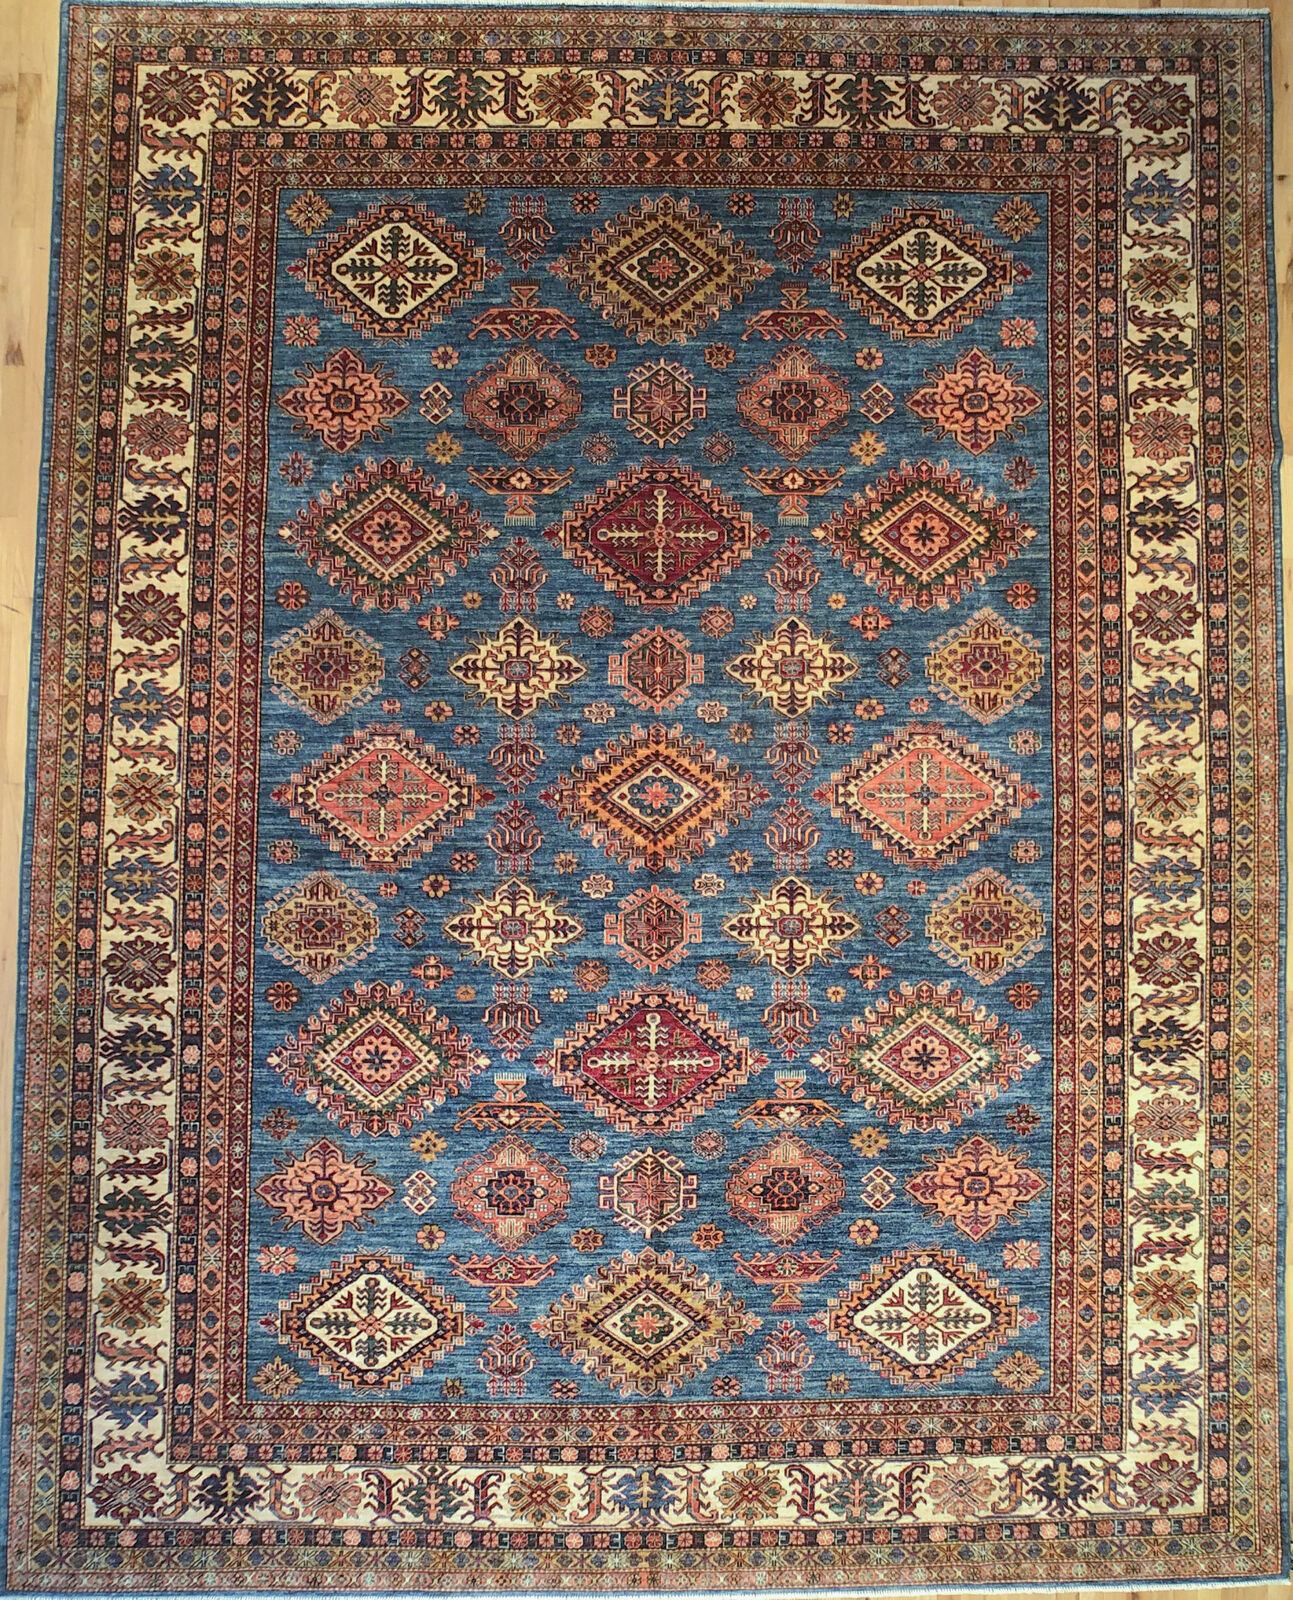 Hand-knotted Rug (Carpet) 10'X12'7, Kazak mint condition